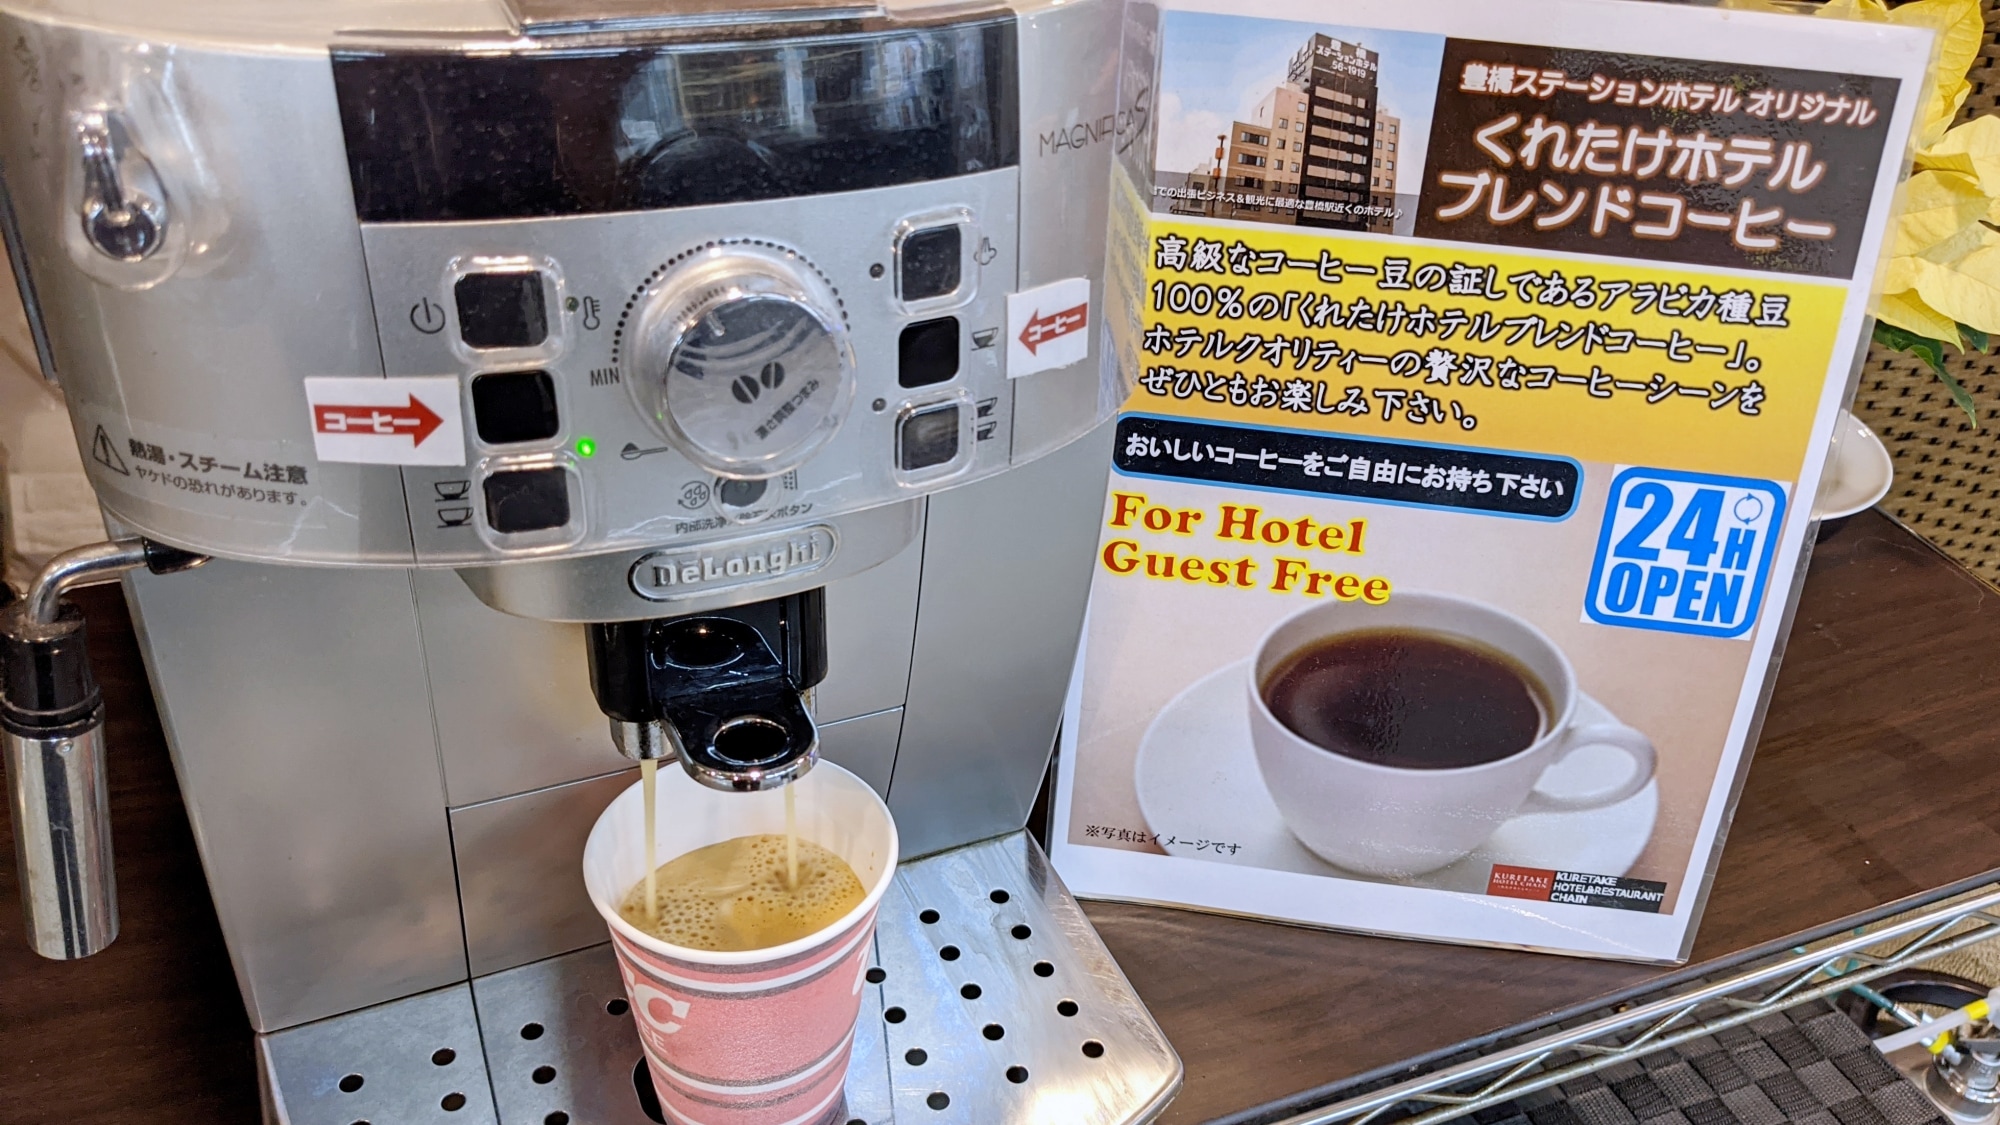 24-hour freshly ground coffee service